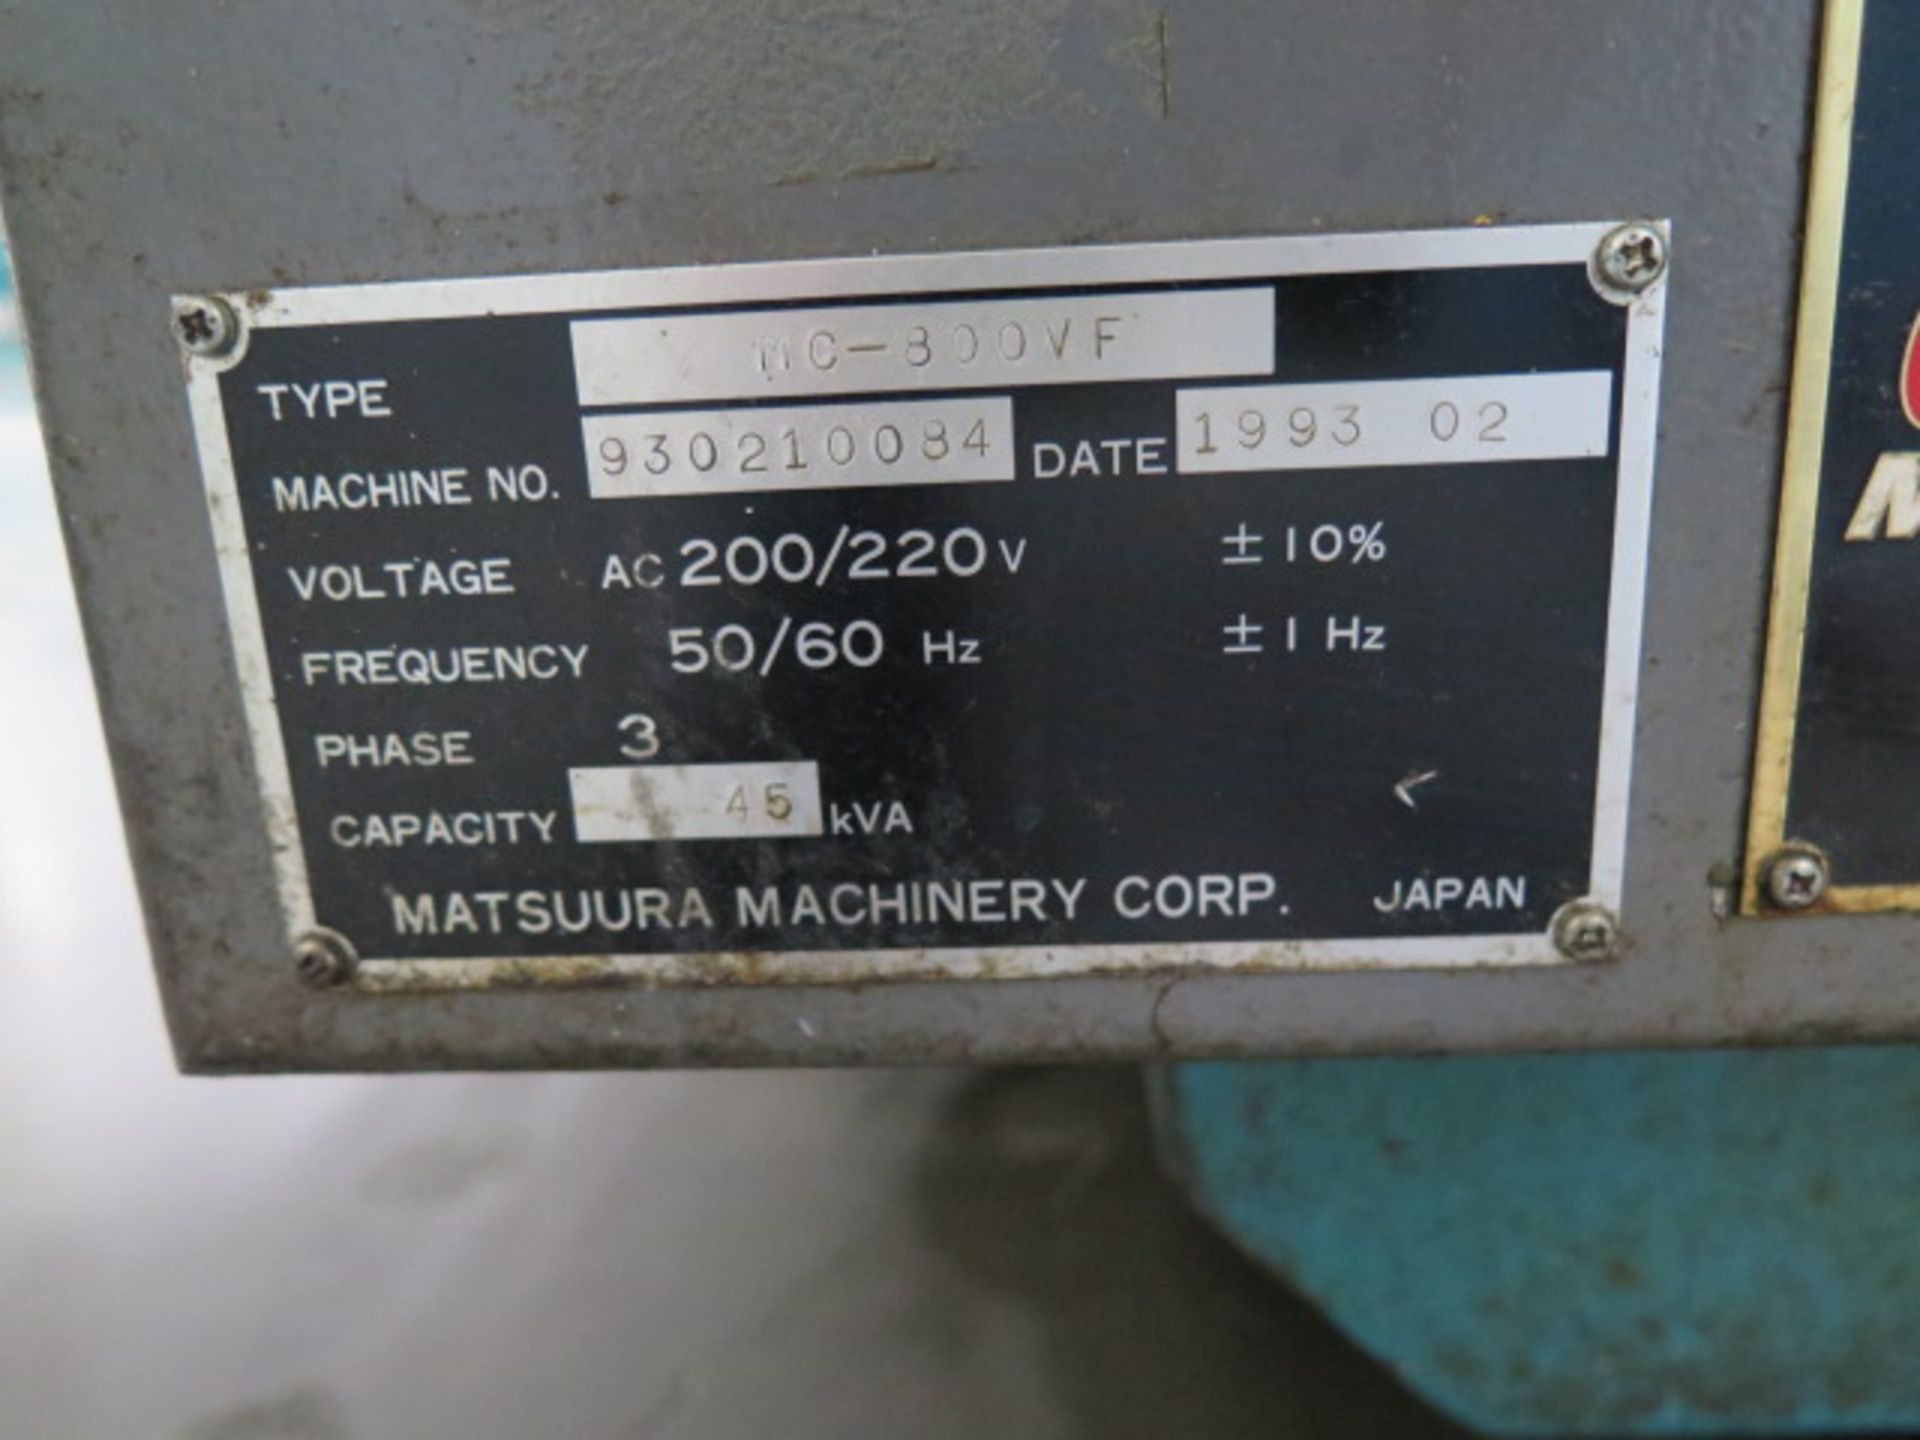 1993 Matsuura MC-800VF CNC Vertical Machining Center s/n 930210084 w/ Yasnac i-80 Controls, 30-Stat - Image 22 of 22